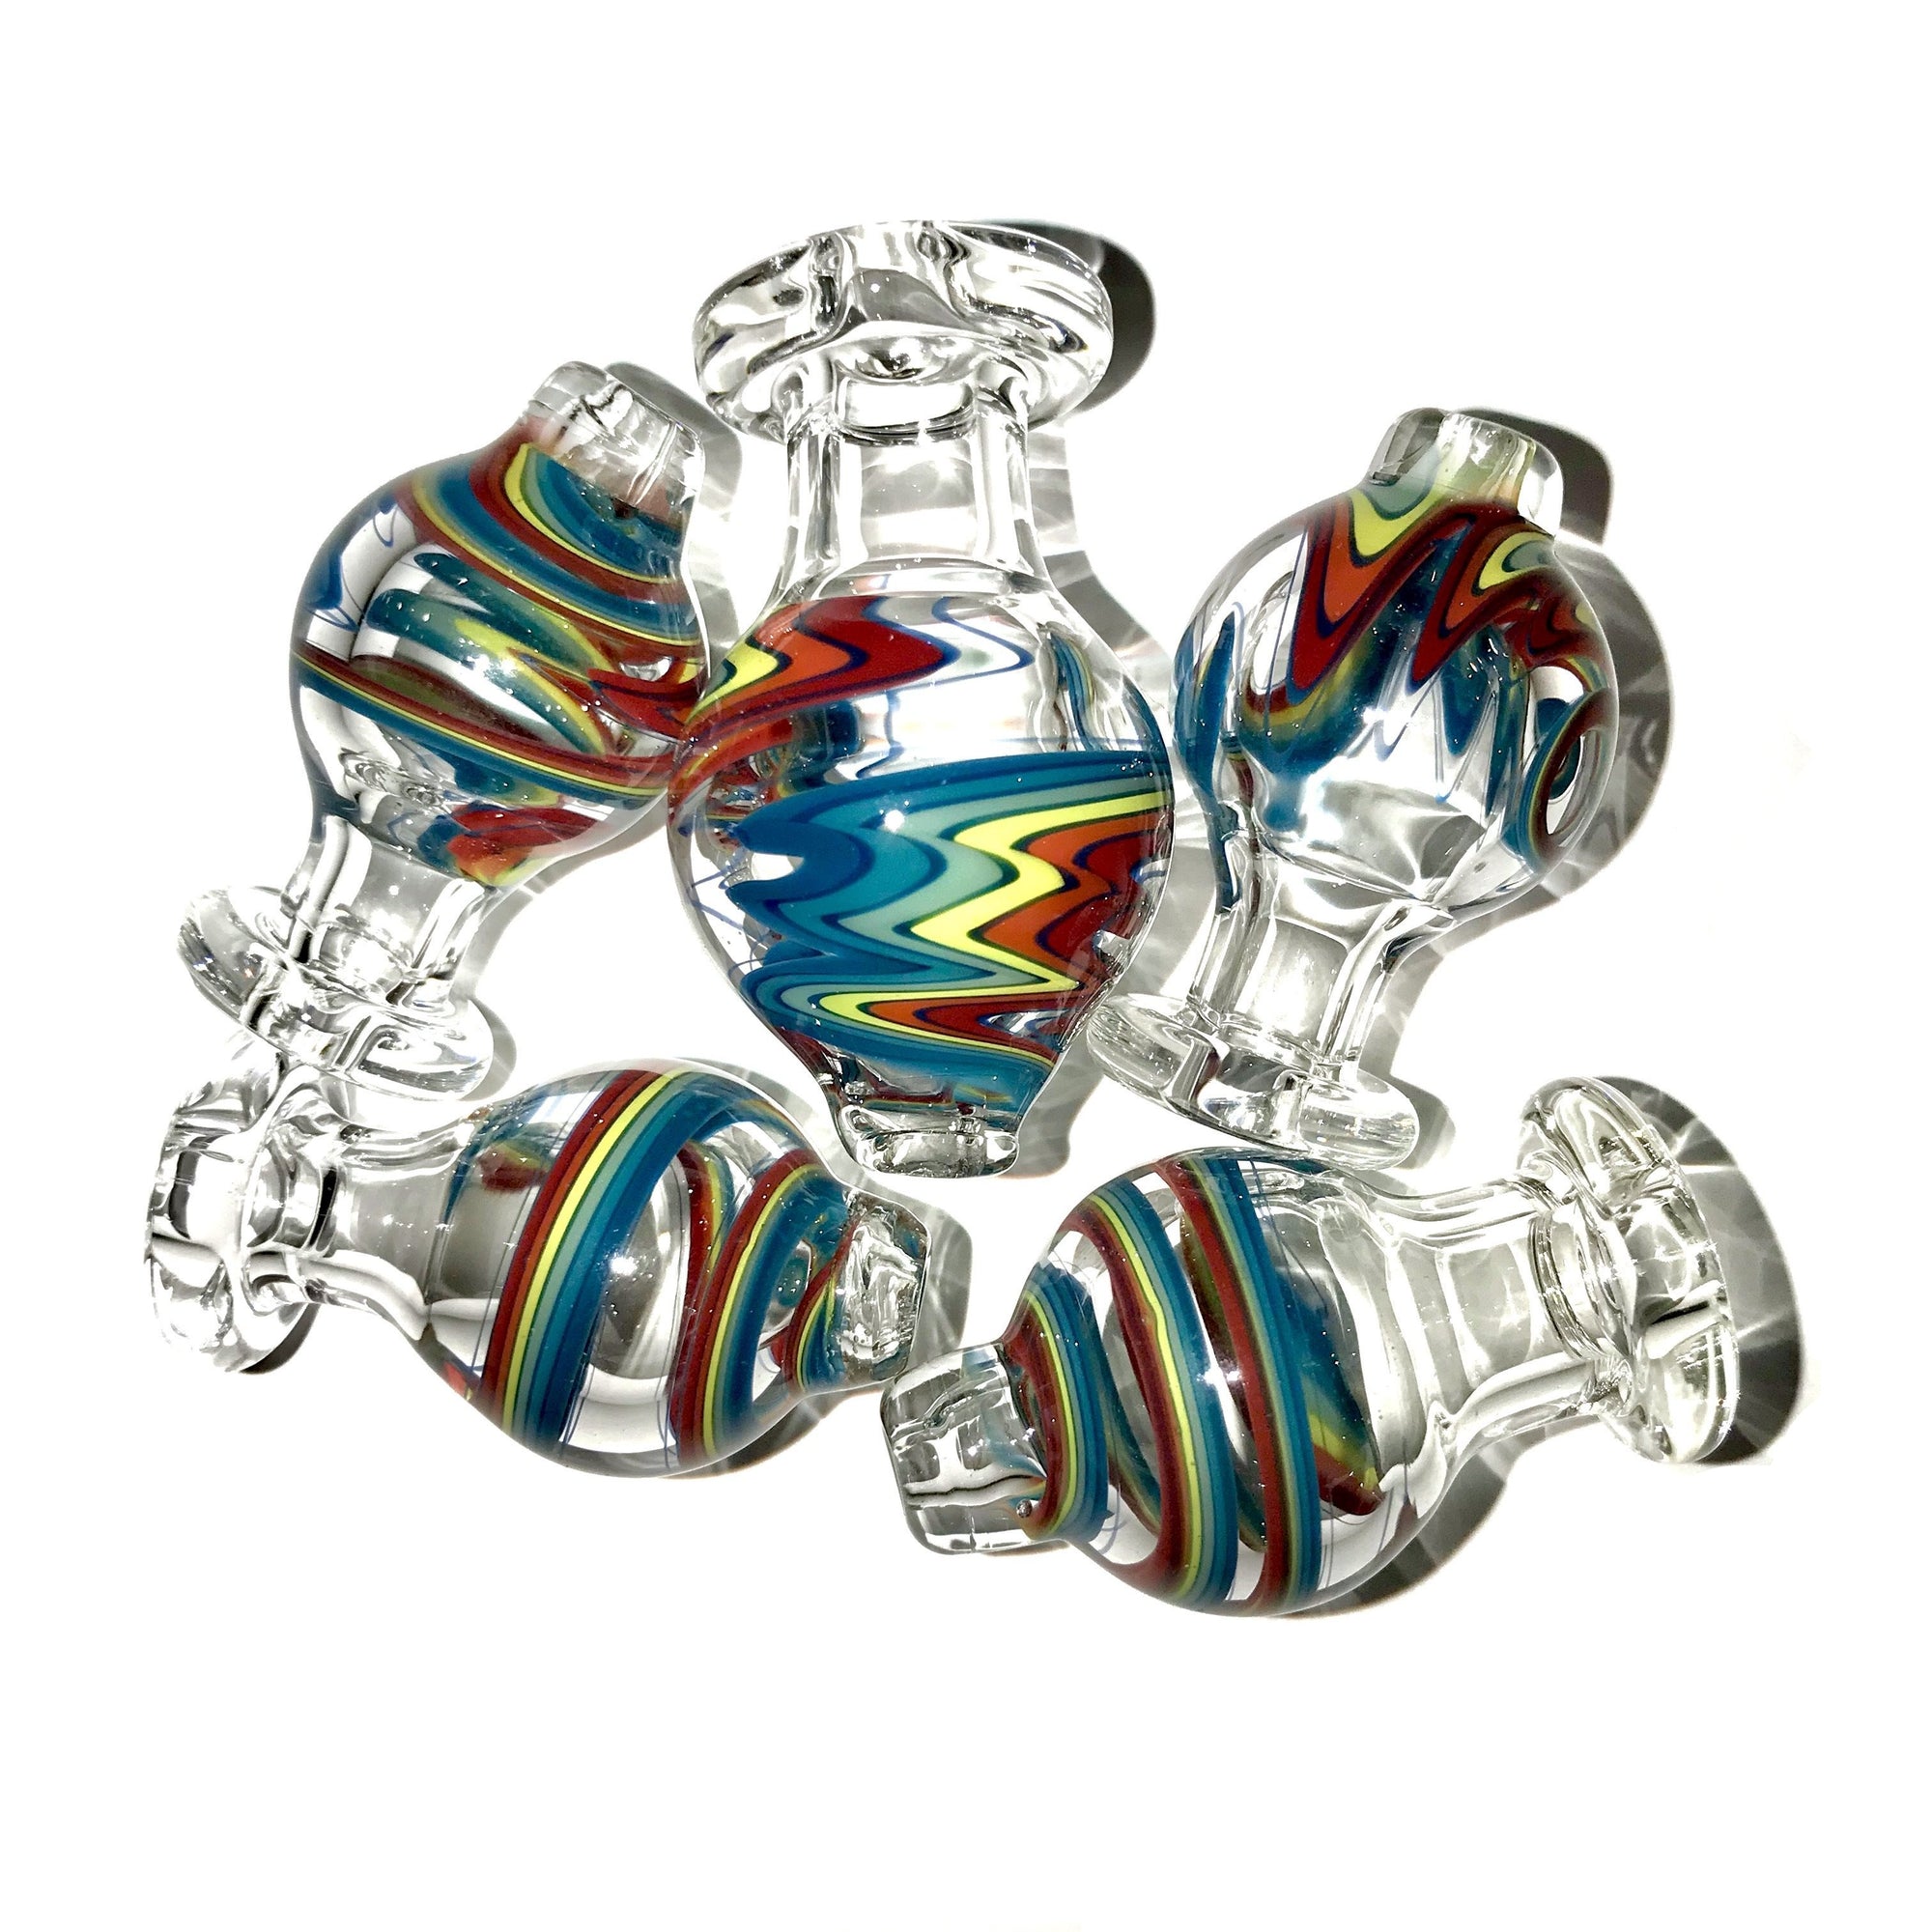 Hocus Pocus Glass Clear and Rainbow Linework Bubble Cap (One Single Bubble Cap)